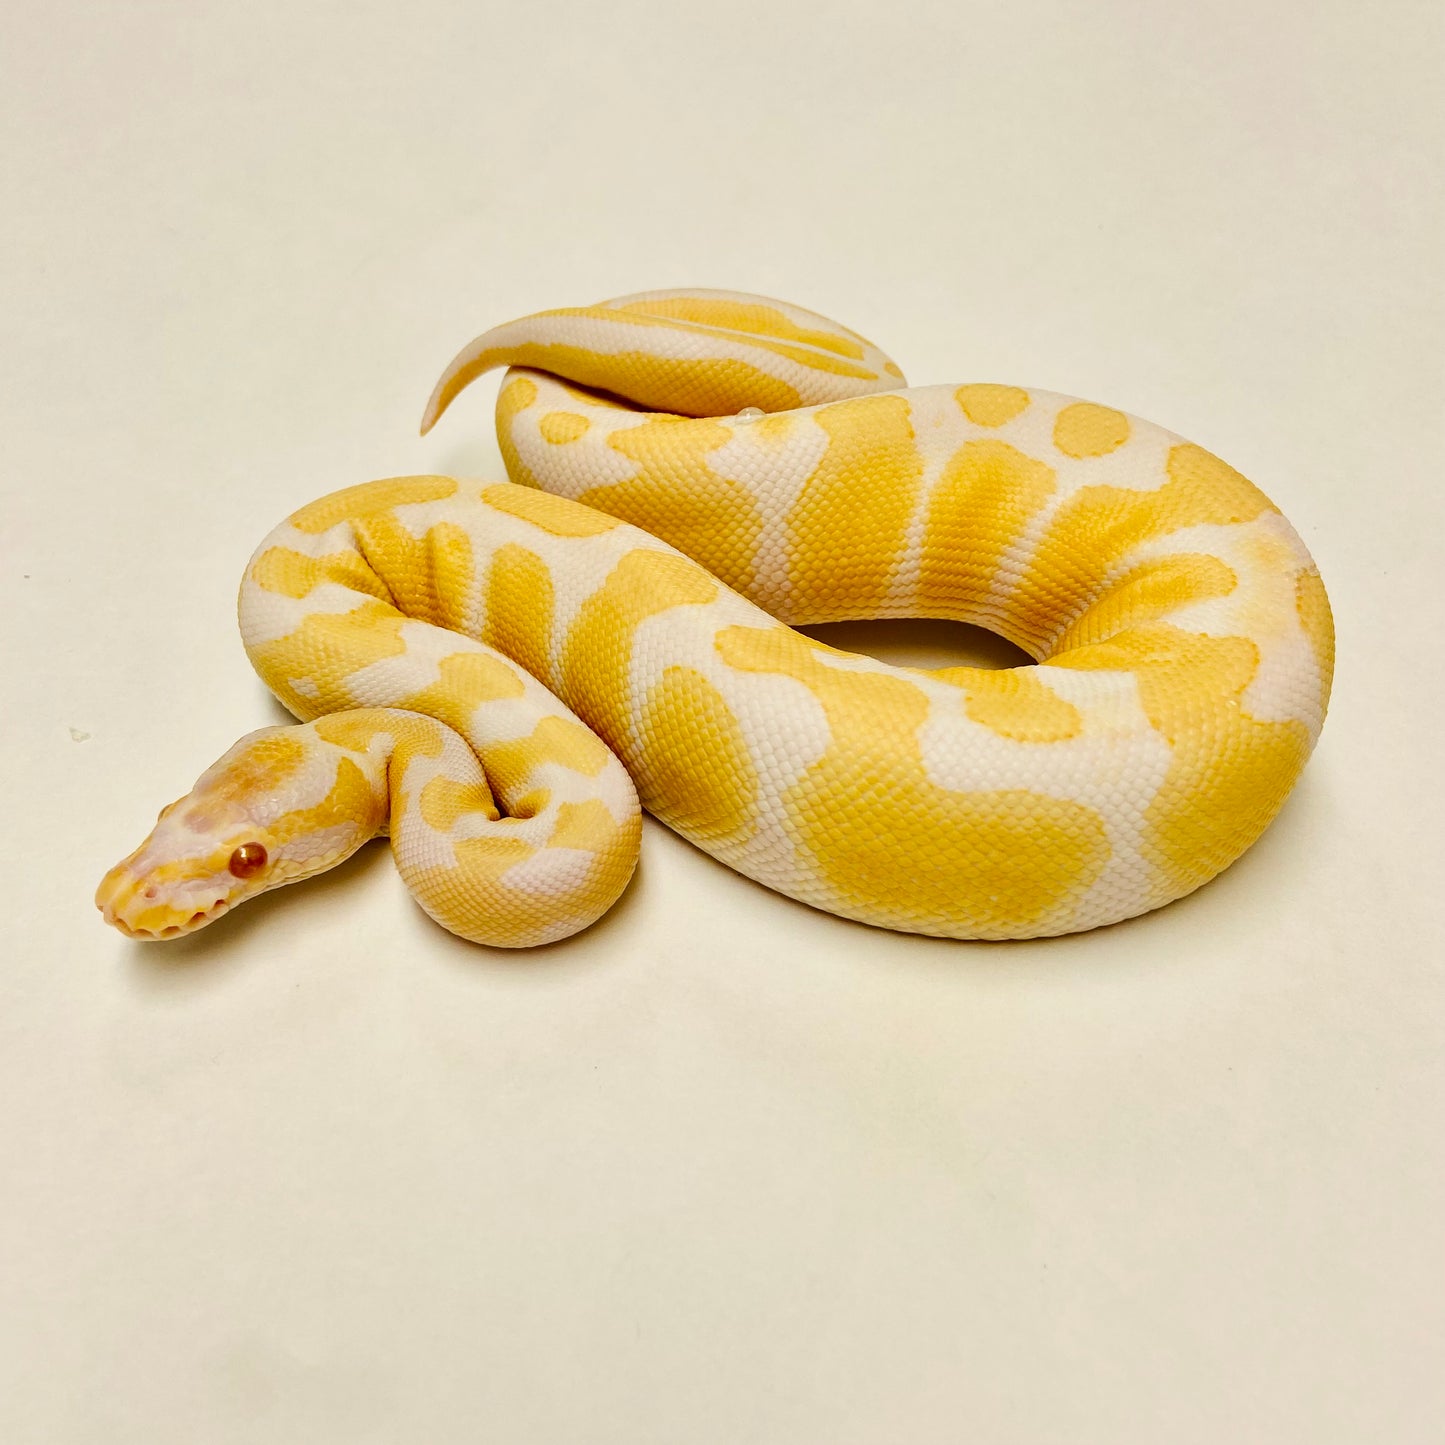 Albino Het Pied Ball Python- Male #2023M04